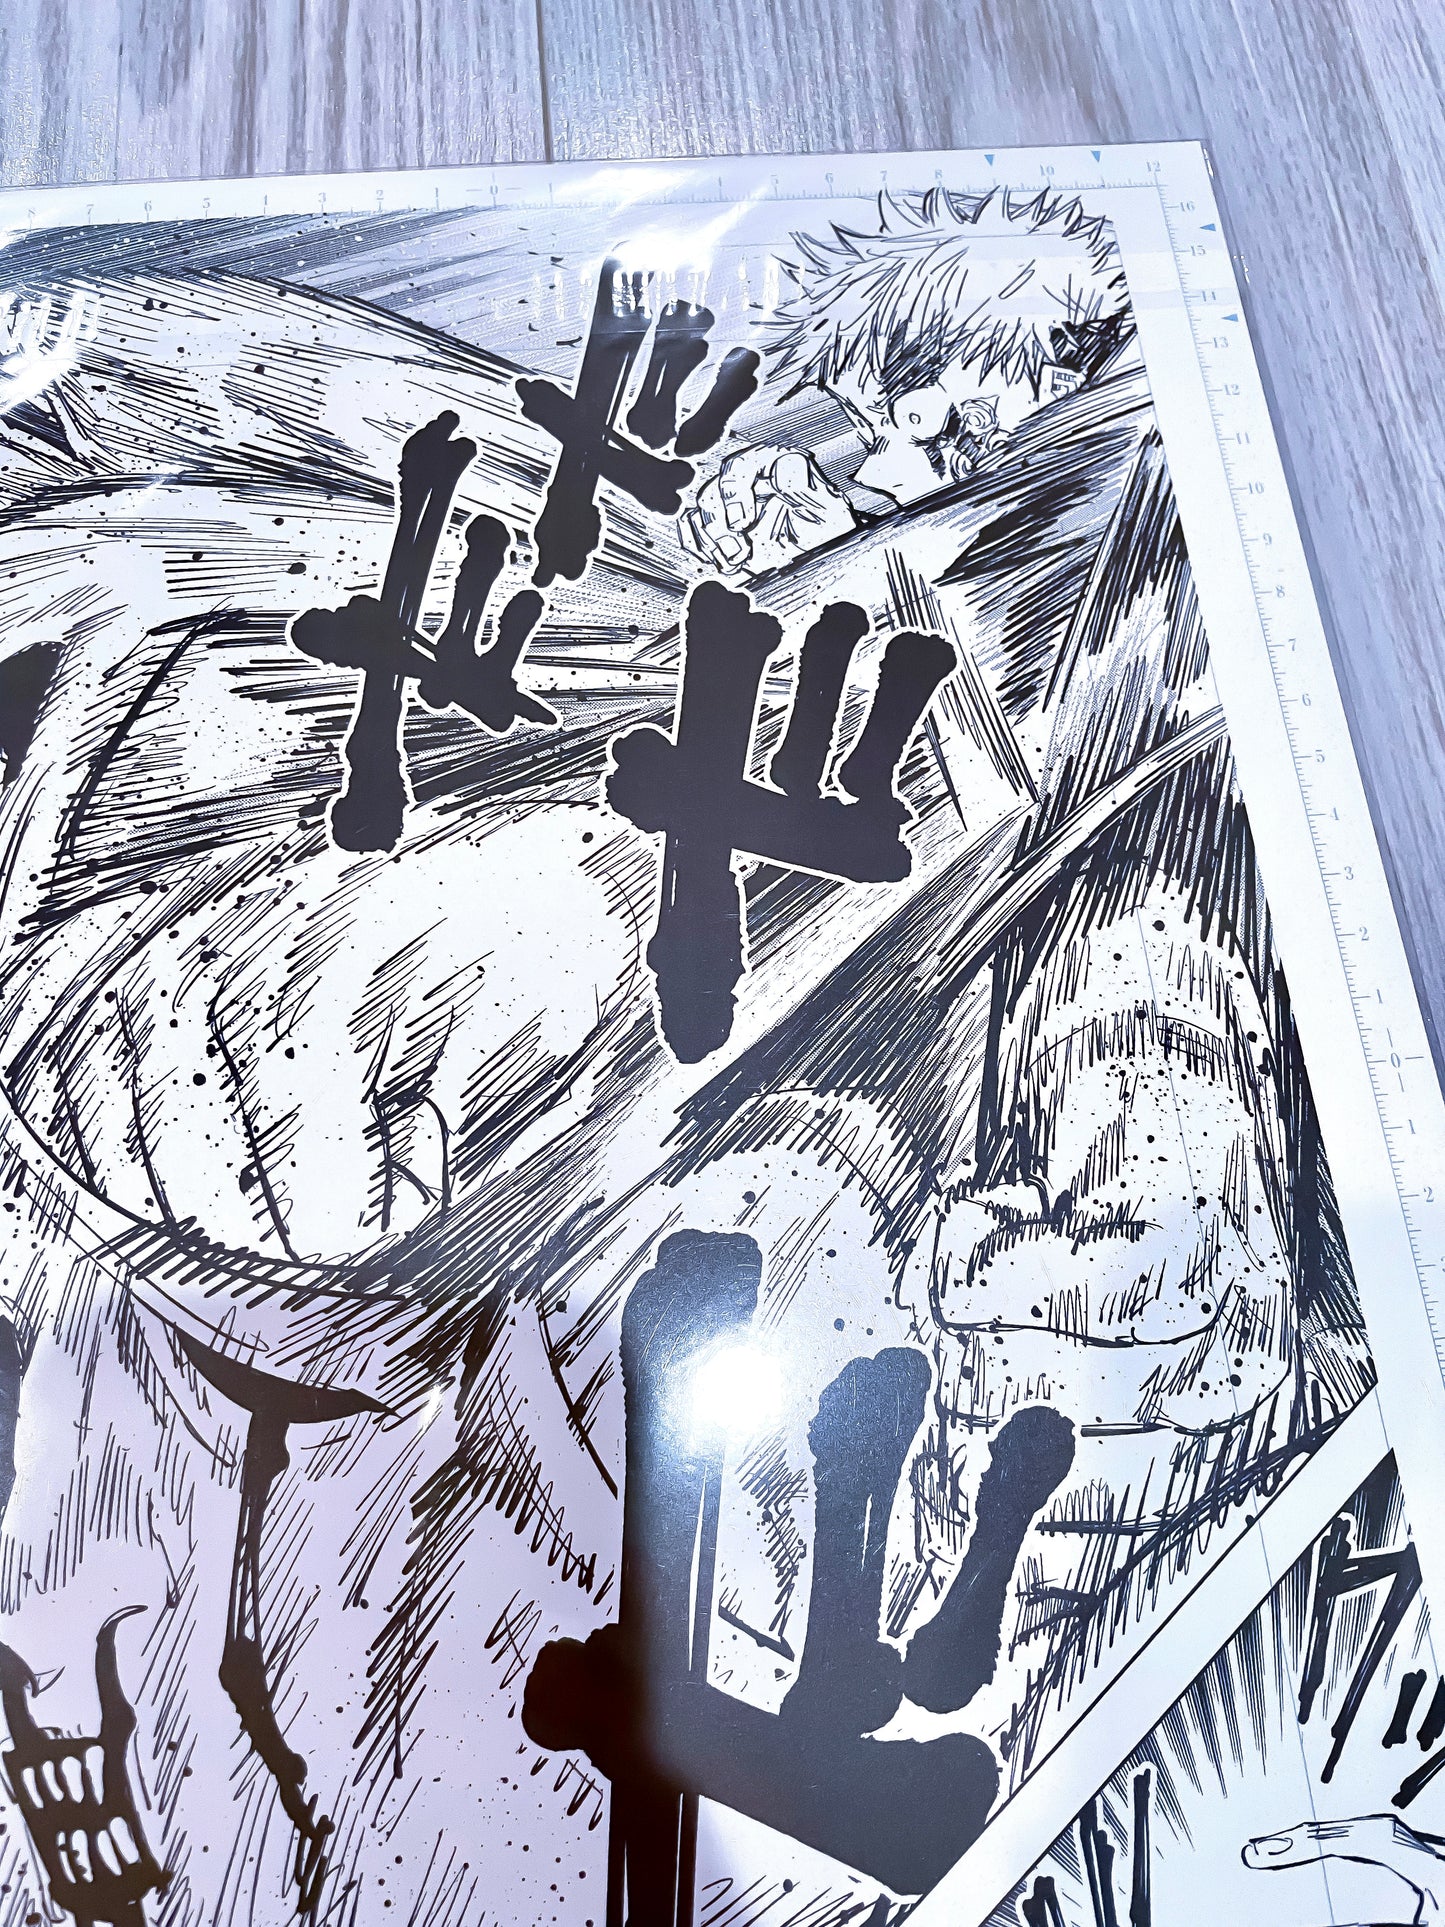 Jujutsu Kaisen Original Genga Poster Artwork - Shonen Jump Exclusive